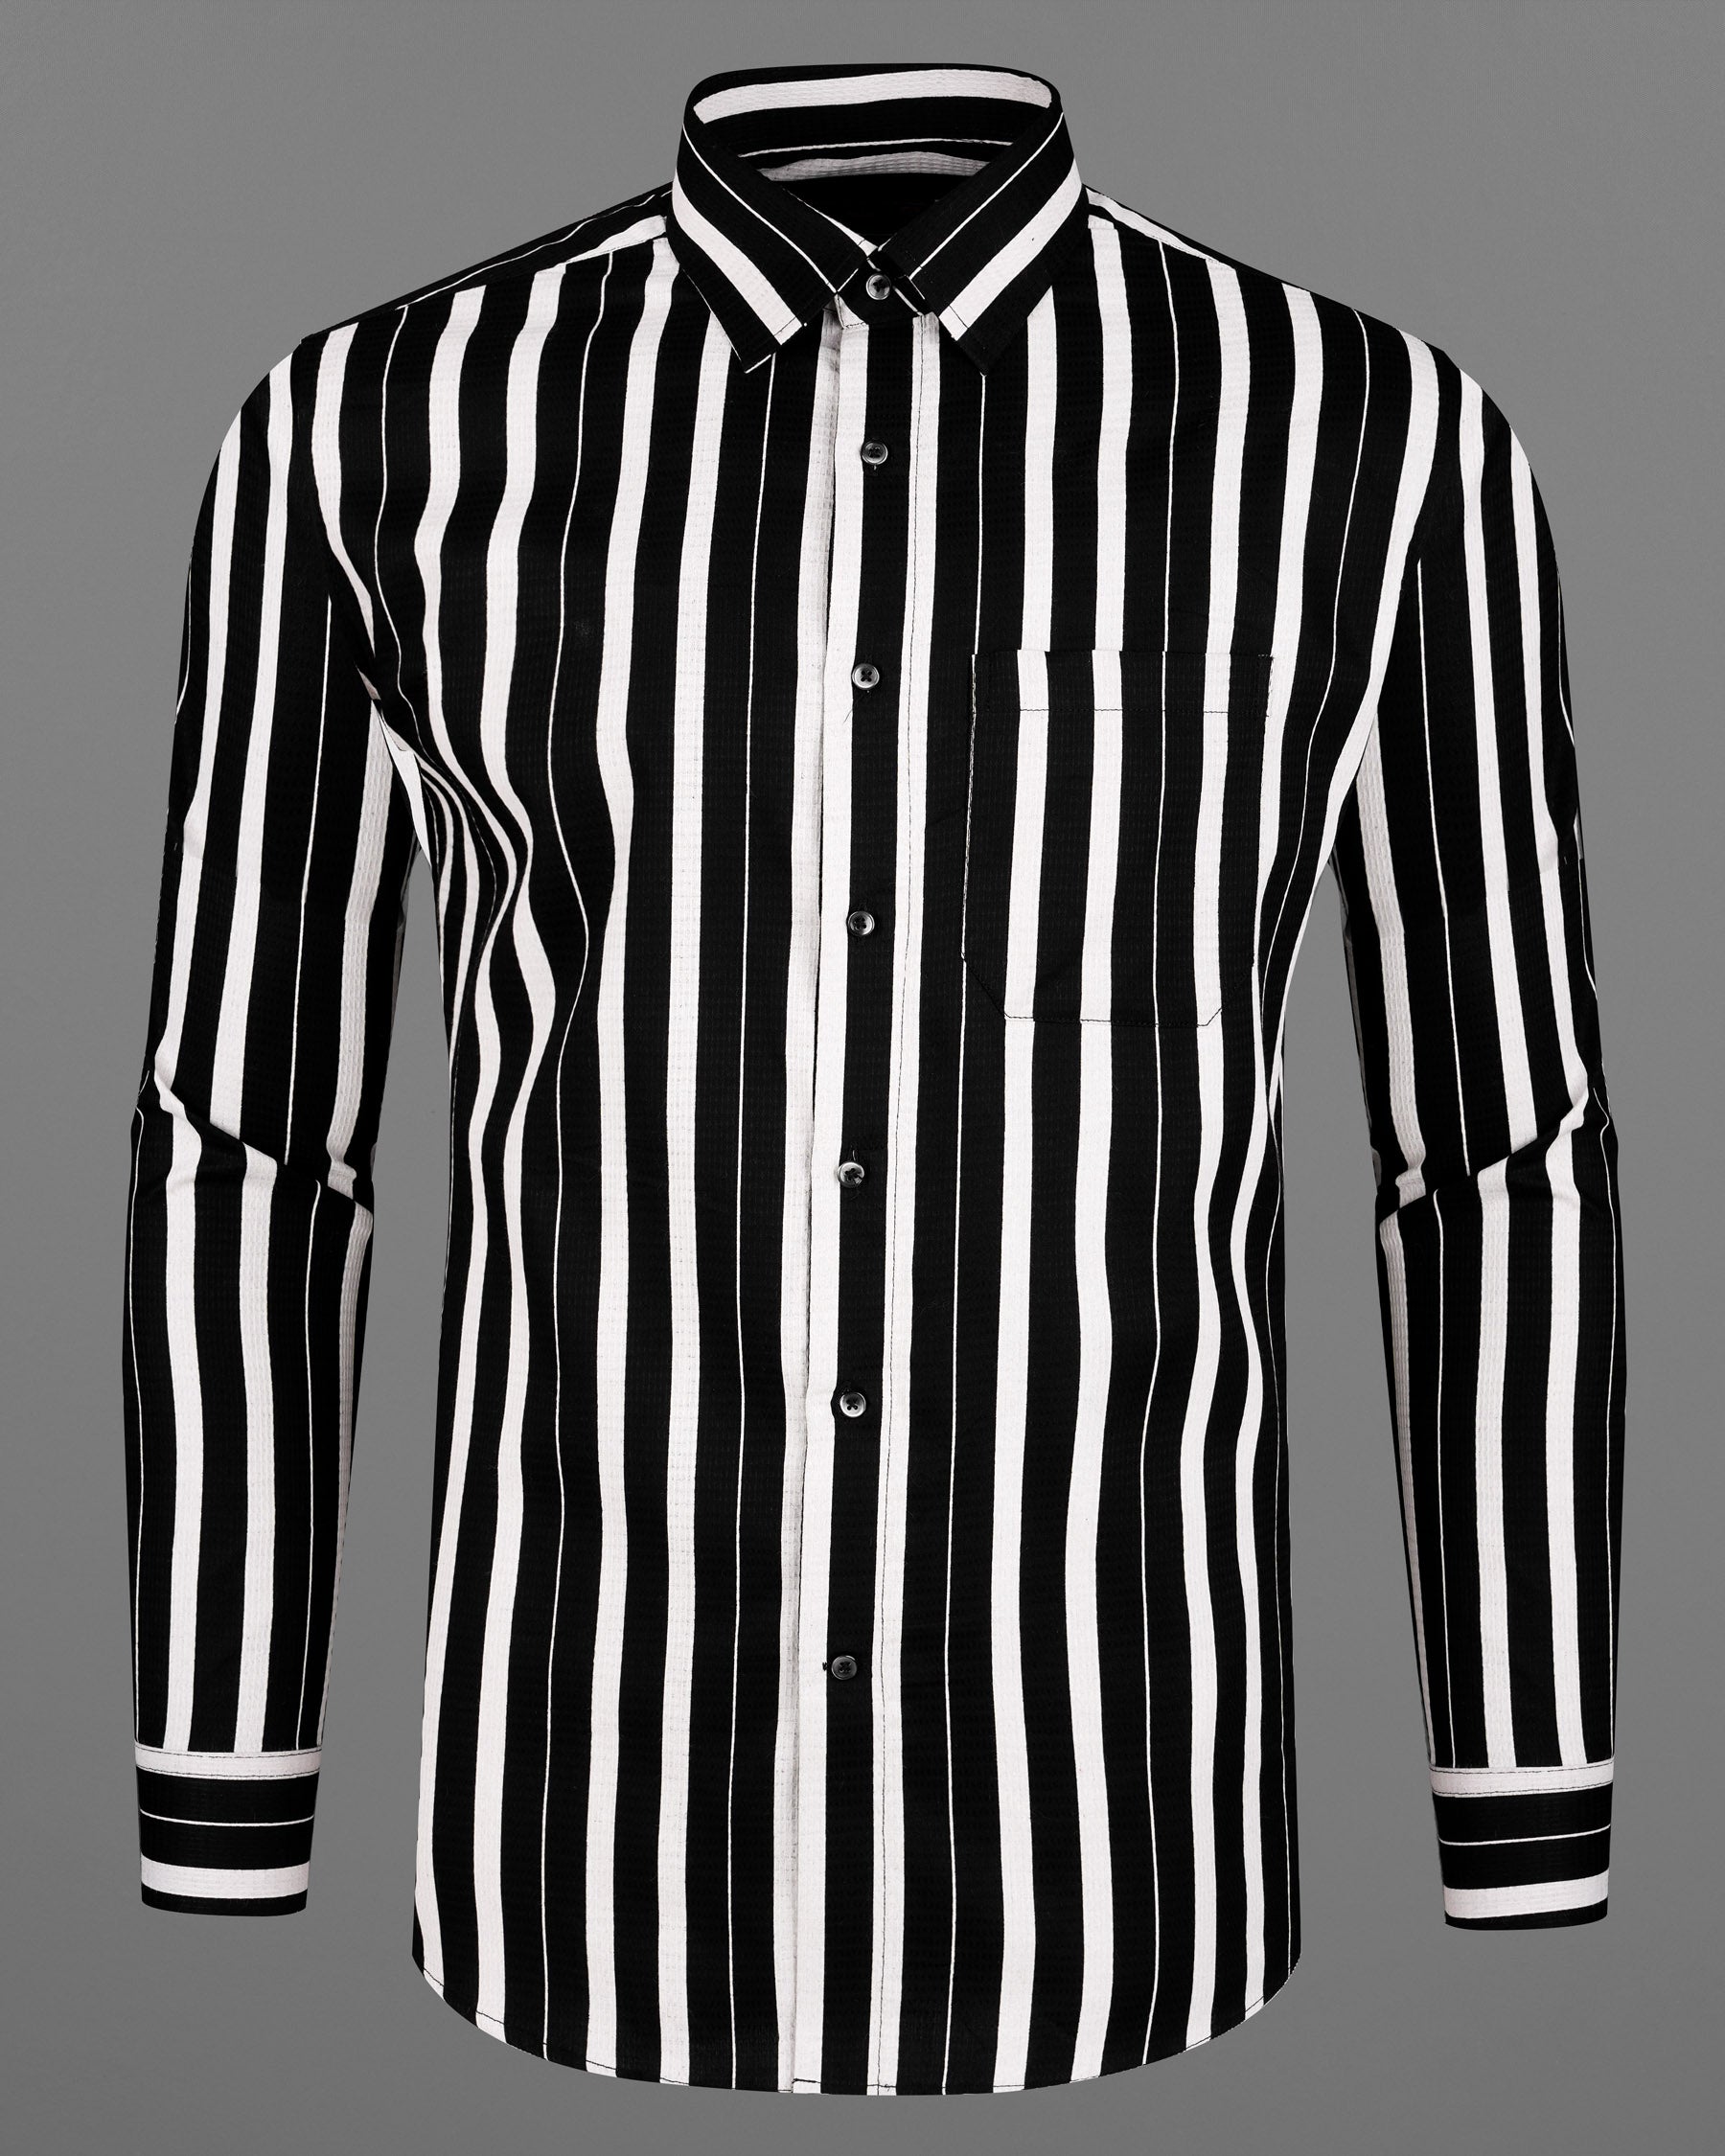 Jade Black and Gainsboro off White Striped Dobby Textured Premium Giza Cotton Shirt 7879-BLK-38, 7879-BLK-H-38, 7879-BLK-39, 7879-BLK-H-39, 7879-BLK-40, 7879-BLK-H-40, 7879-BLK-42, 7879-BLK-H-42, 7879-BLK-44, 7879-BLK-H-44, 7879-BLK-46, 7879-BLK-H-46, 7879-BLK-48, 7879-BLK-H-48, 7879-BLK-50, 7879-BLK-H-50, 7879-BLK-52, 7879-BLK-H-52